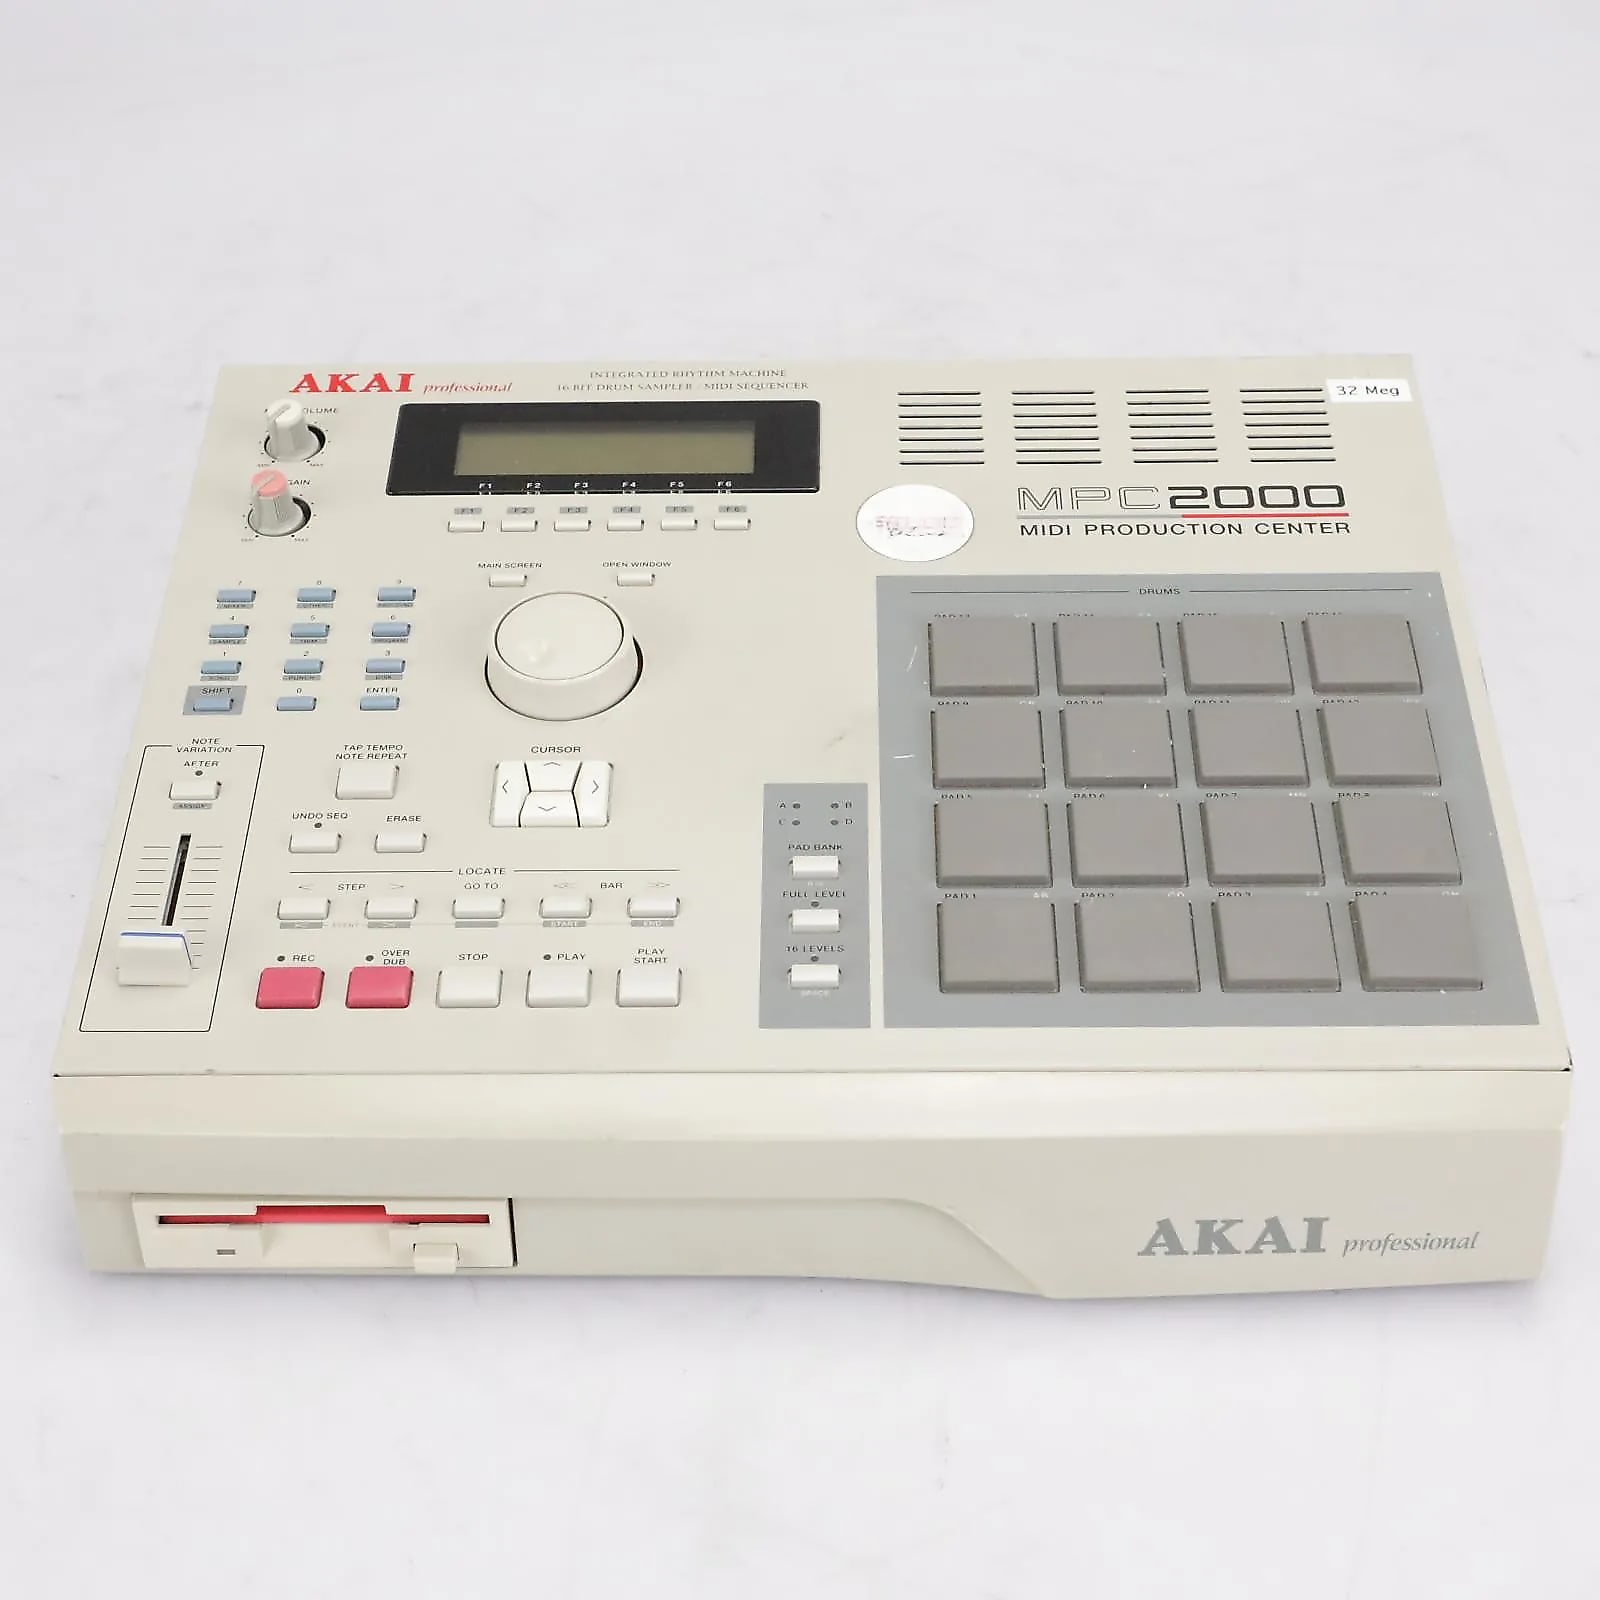 AKAI mpc-2000